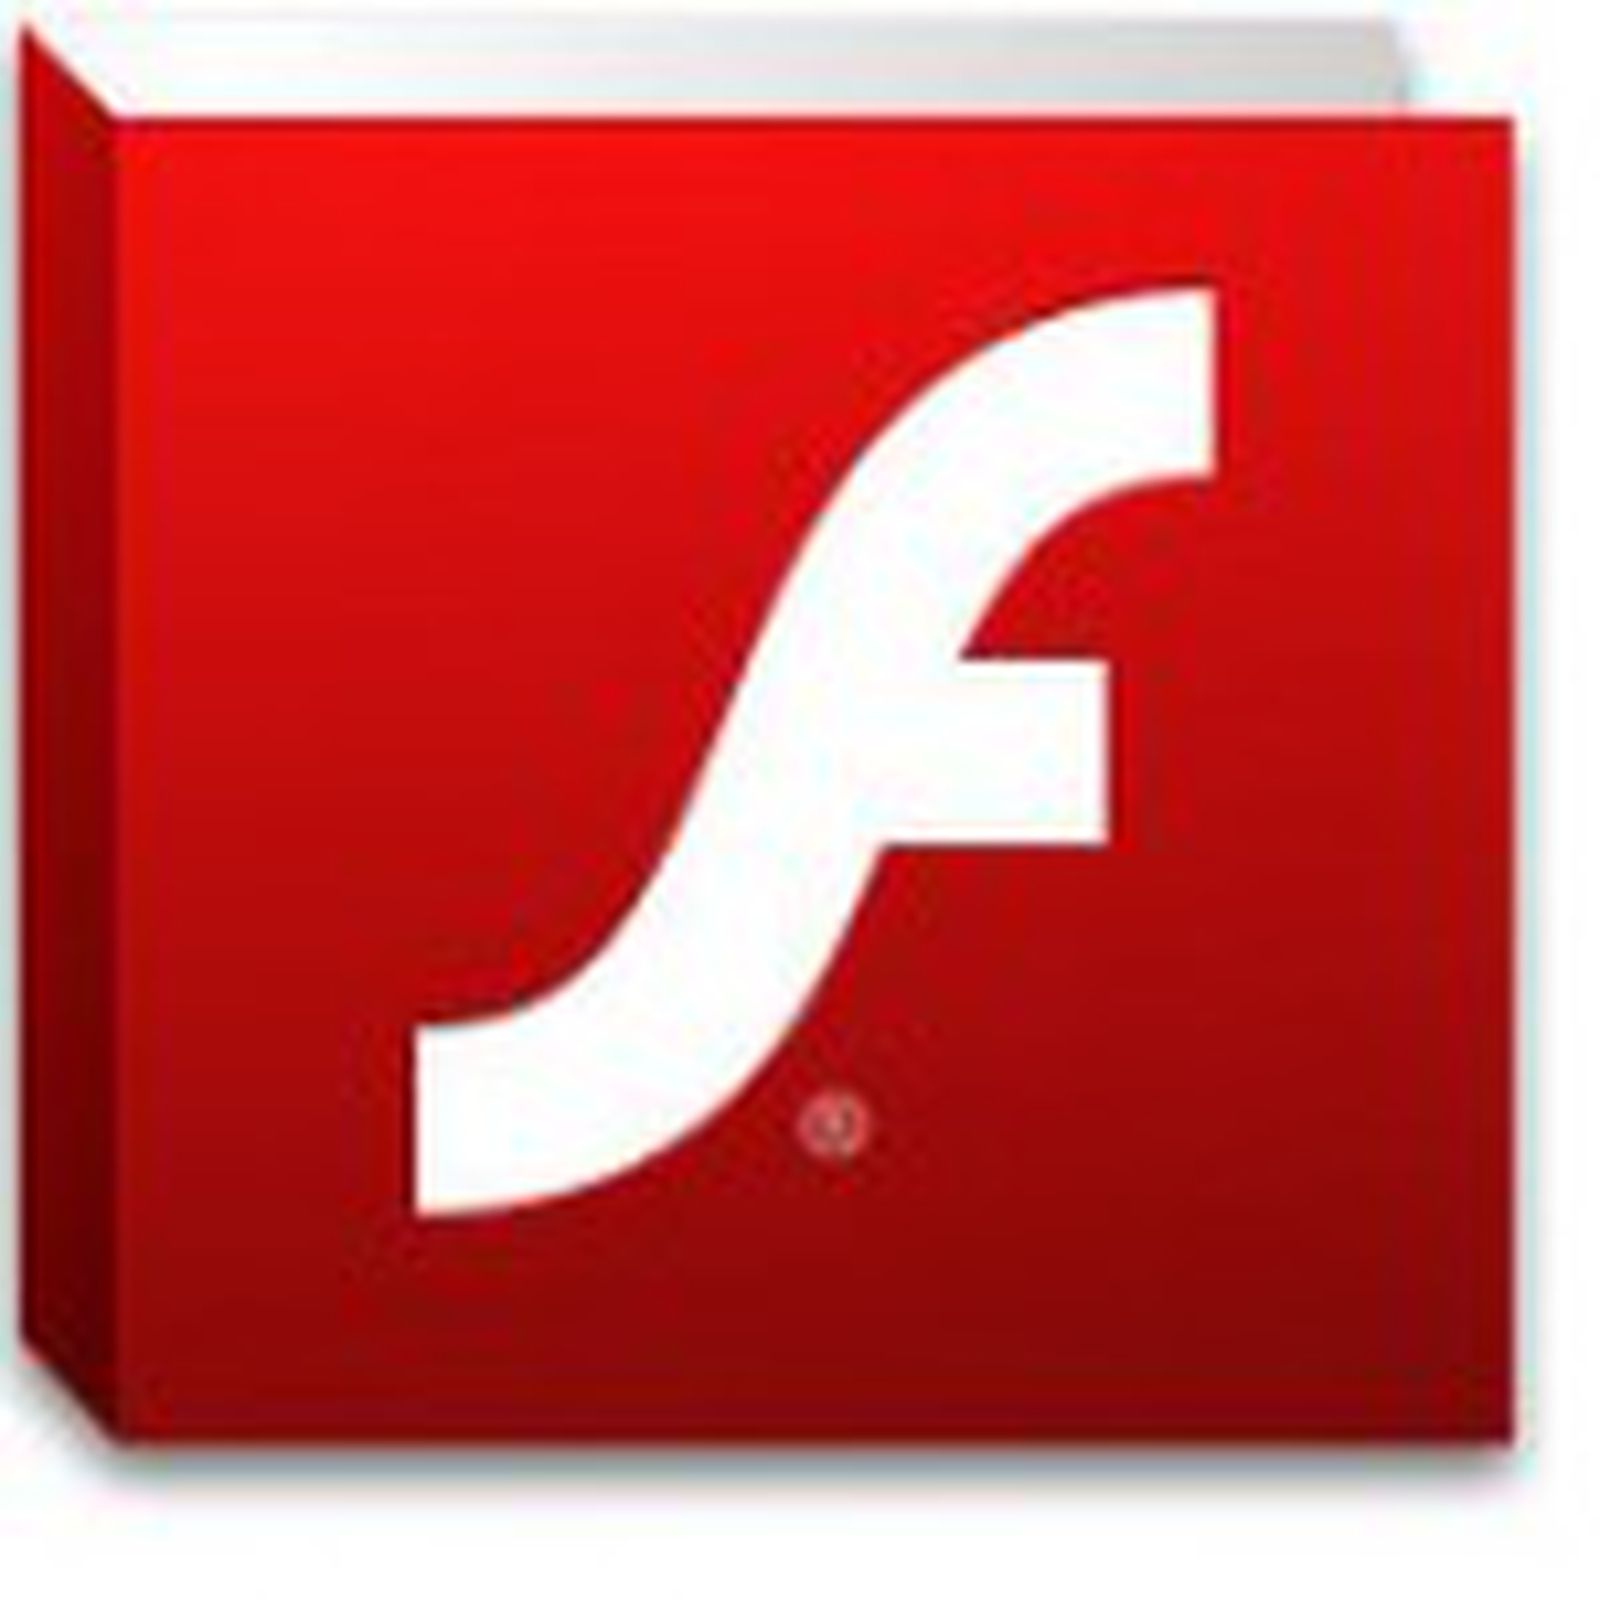 install adobe flash player on macbook air